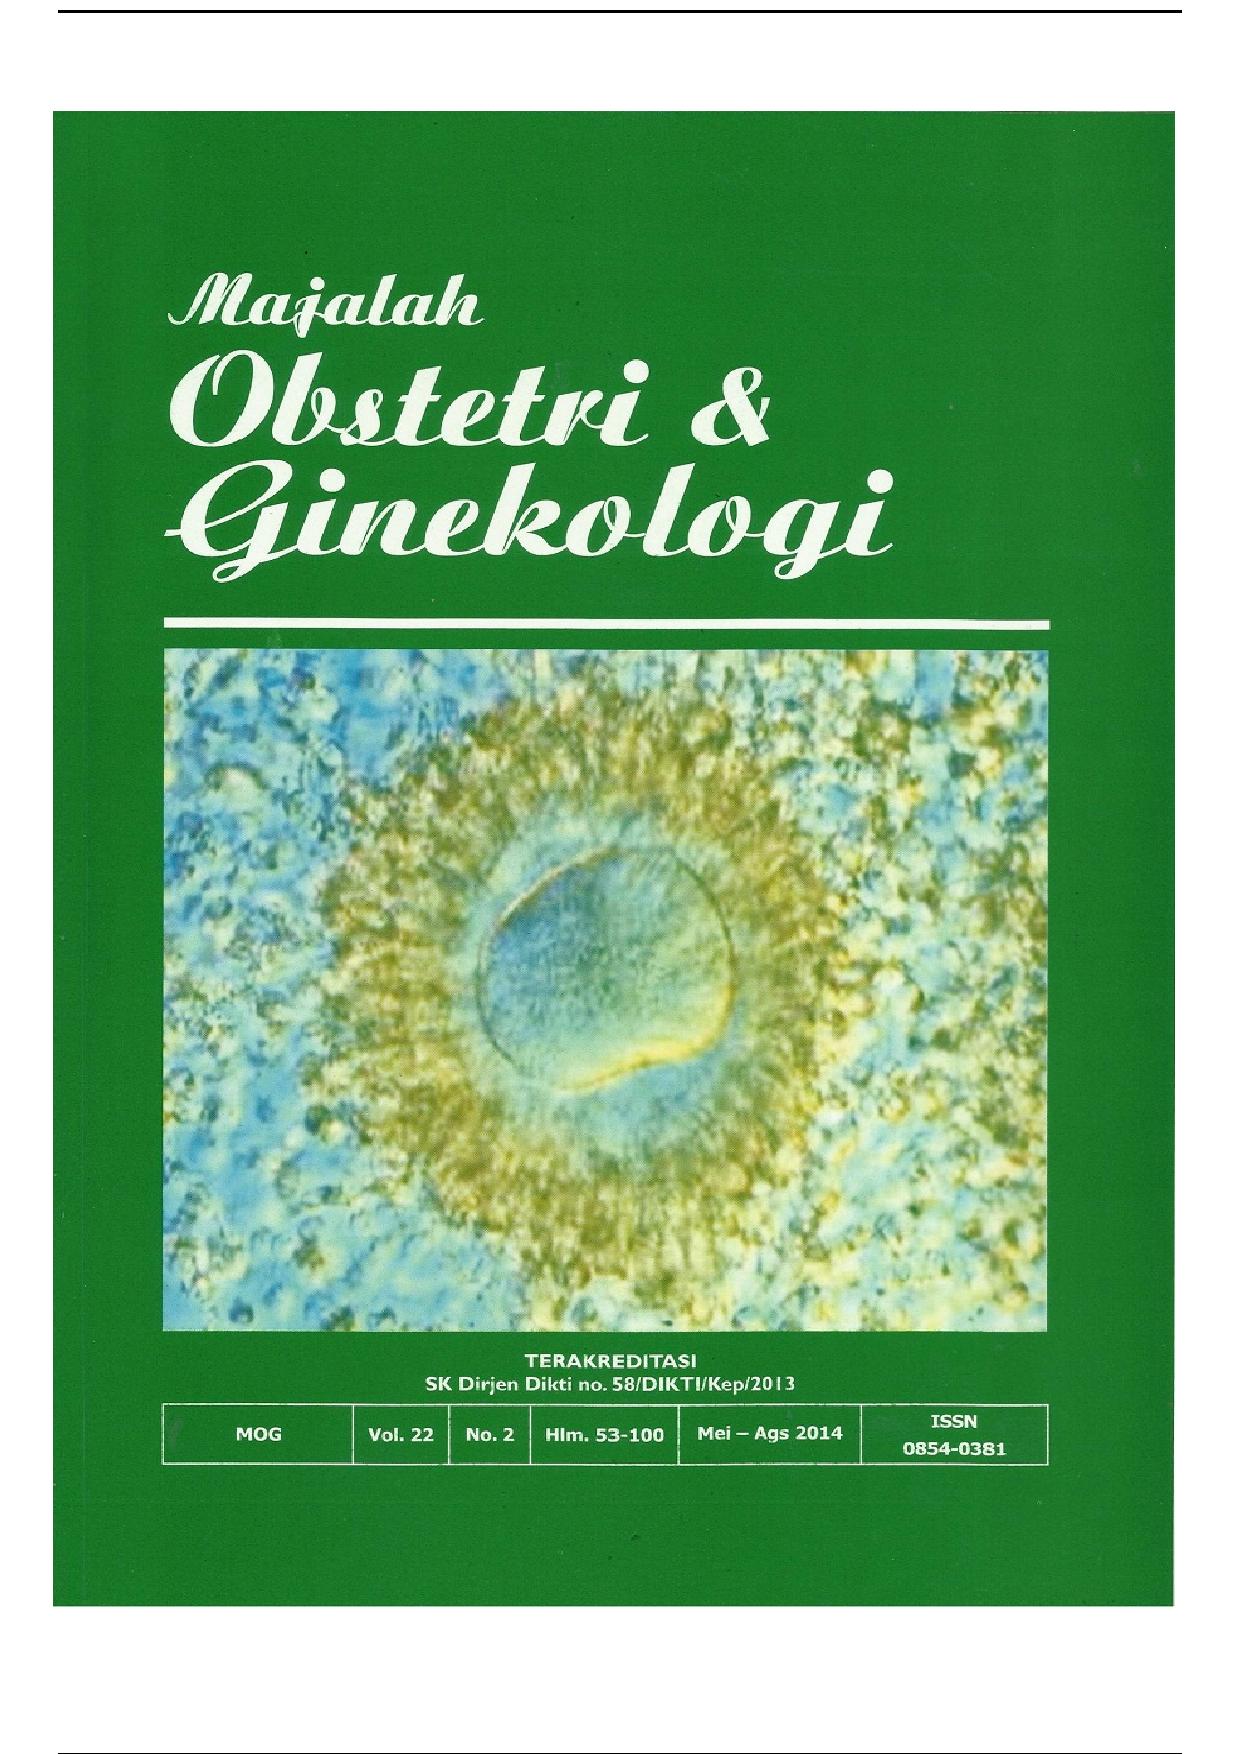 Majalah obstetri dan ginekologi Vol.22 No.2 Mei - Agustus 2014